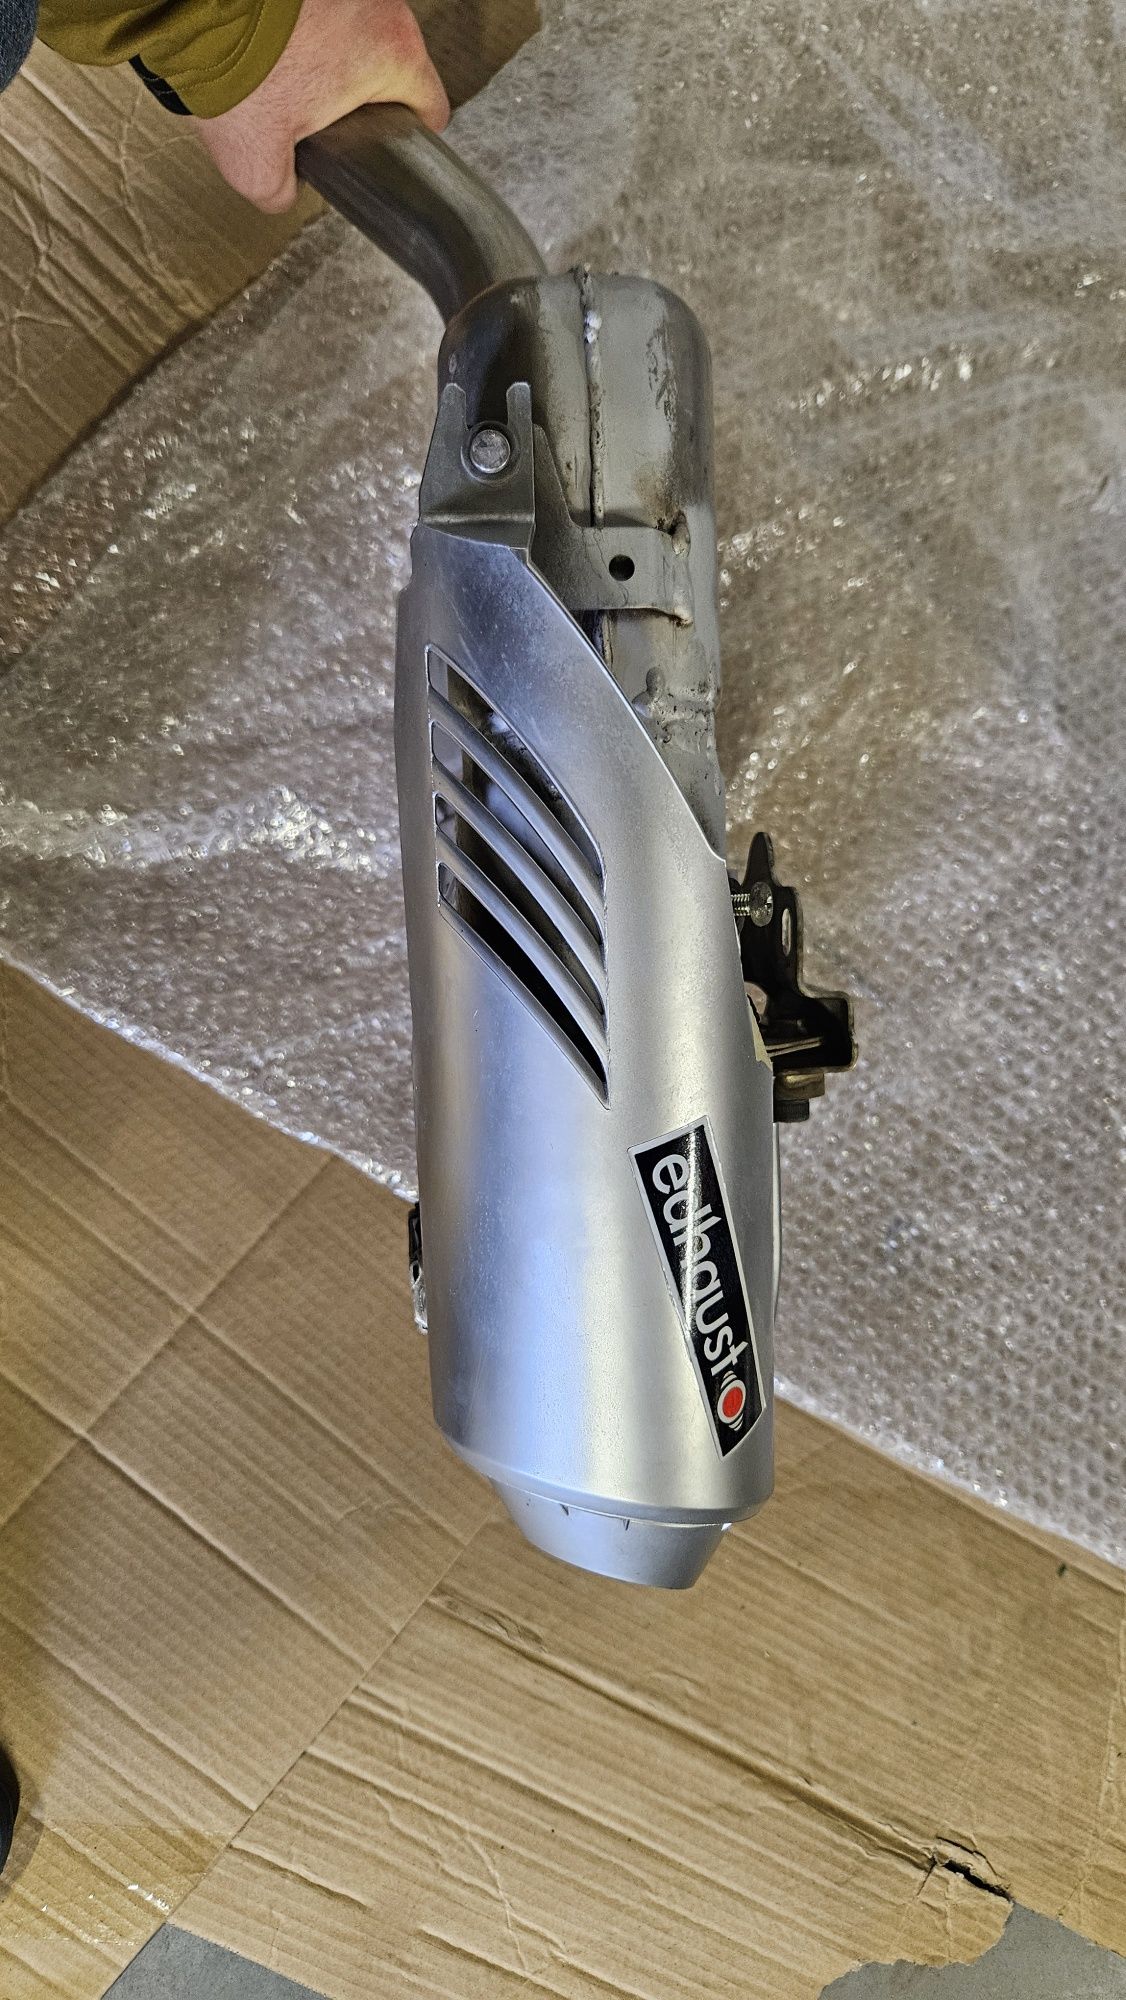 Yamaha FZ6 edhaust tłumik,  wydech